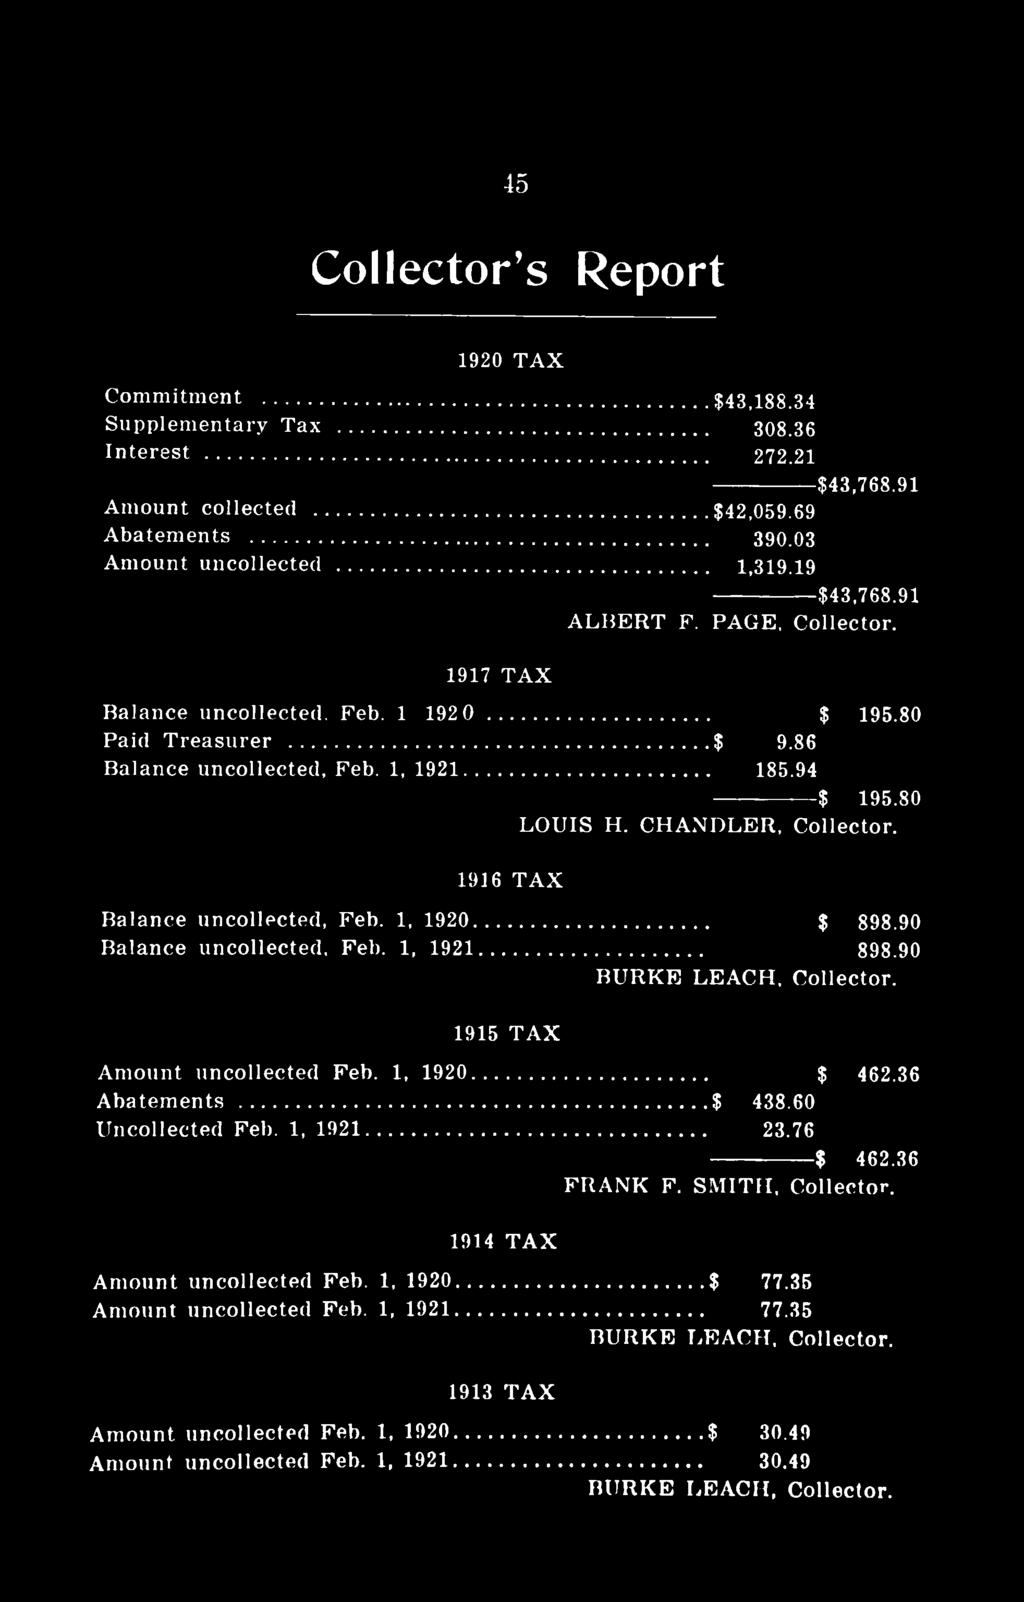 94 -------------- $ 195.80 LOUIS H. CHANDLER, Collector. 1916 TAX Balance uncollected, Feb. 1, 1920... $ 898.90 Balance uncollected, Feb. 1, 1921... 898.90 BURKE LEACH, Collector.